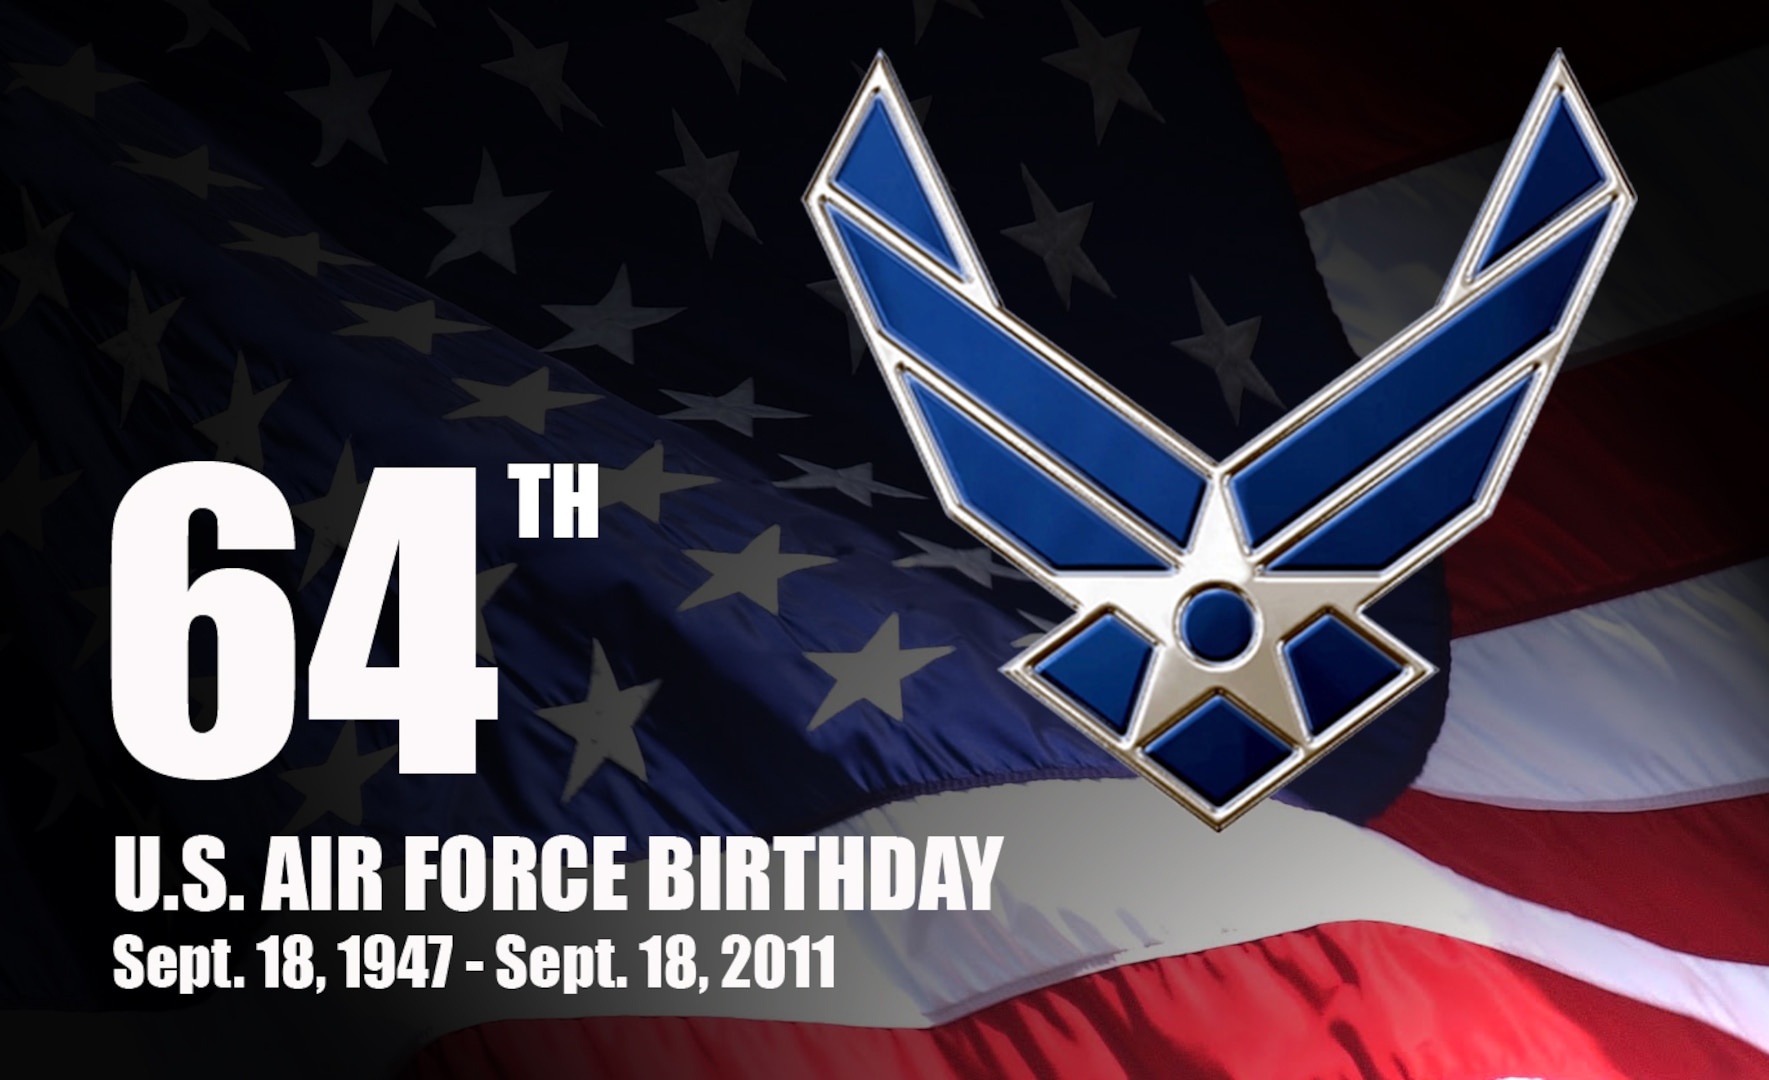 U.S. Air Force celebrates its 64th Birthday, Sept. 18, 2011.